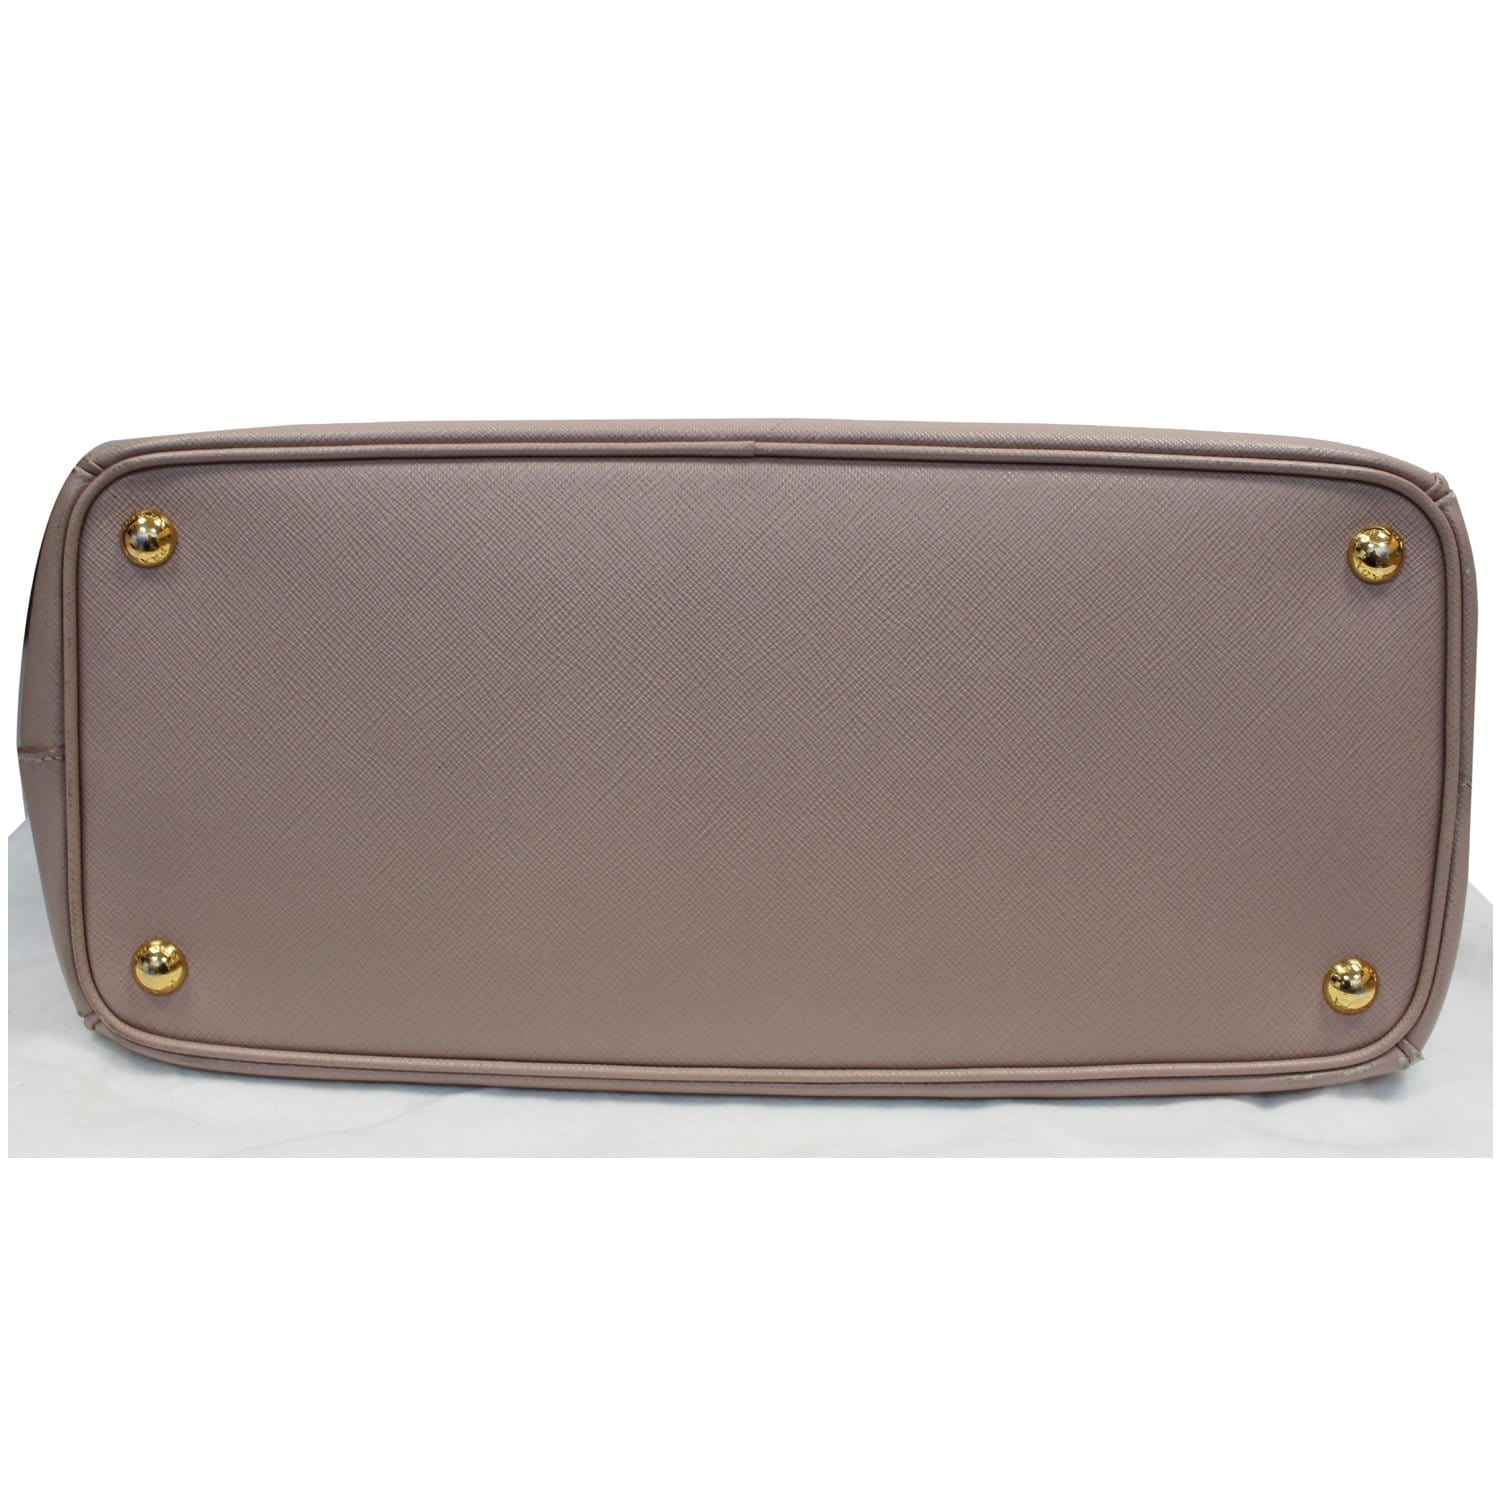 Prada Argilla Gray Saffiano Lux Leather Large Satchel Handbag